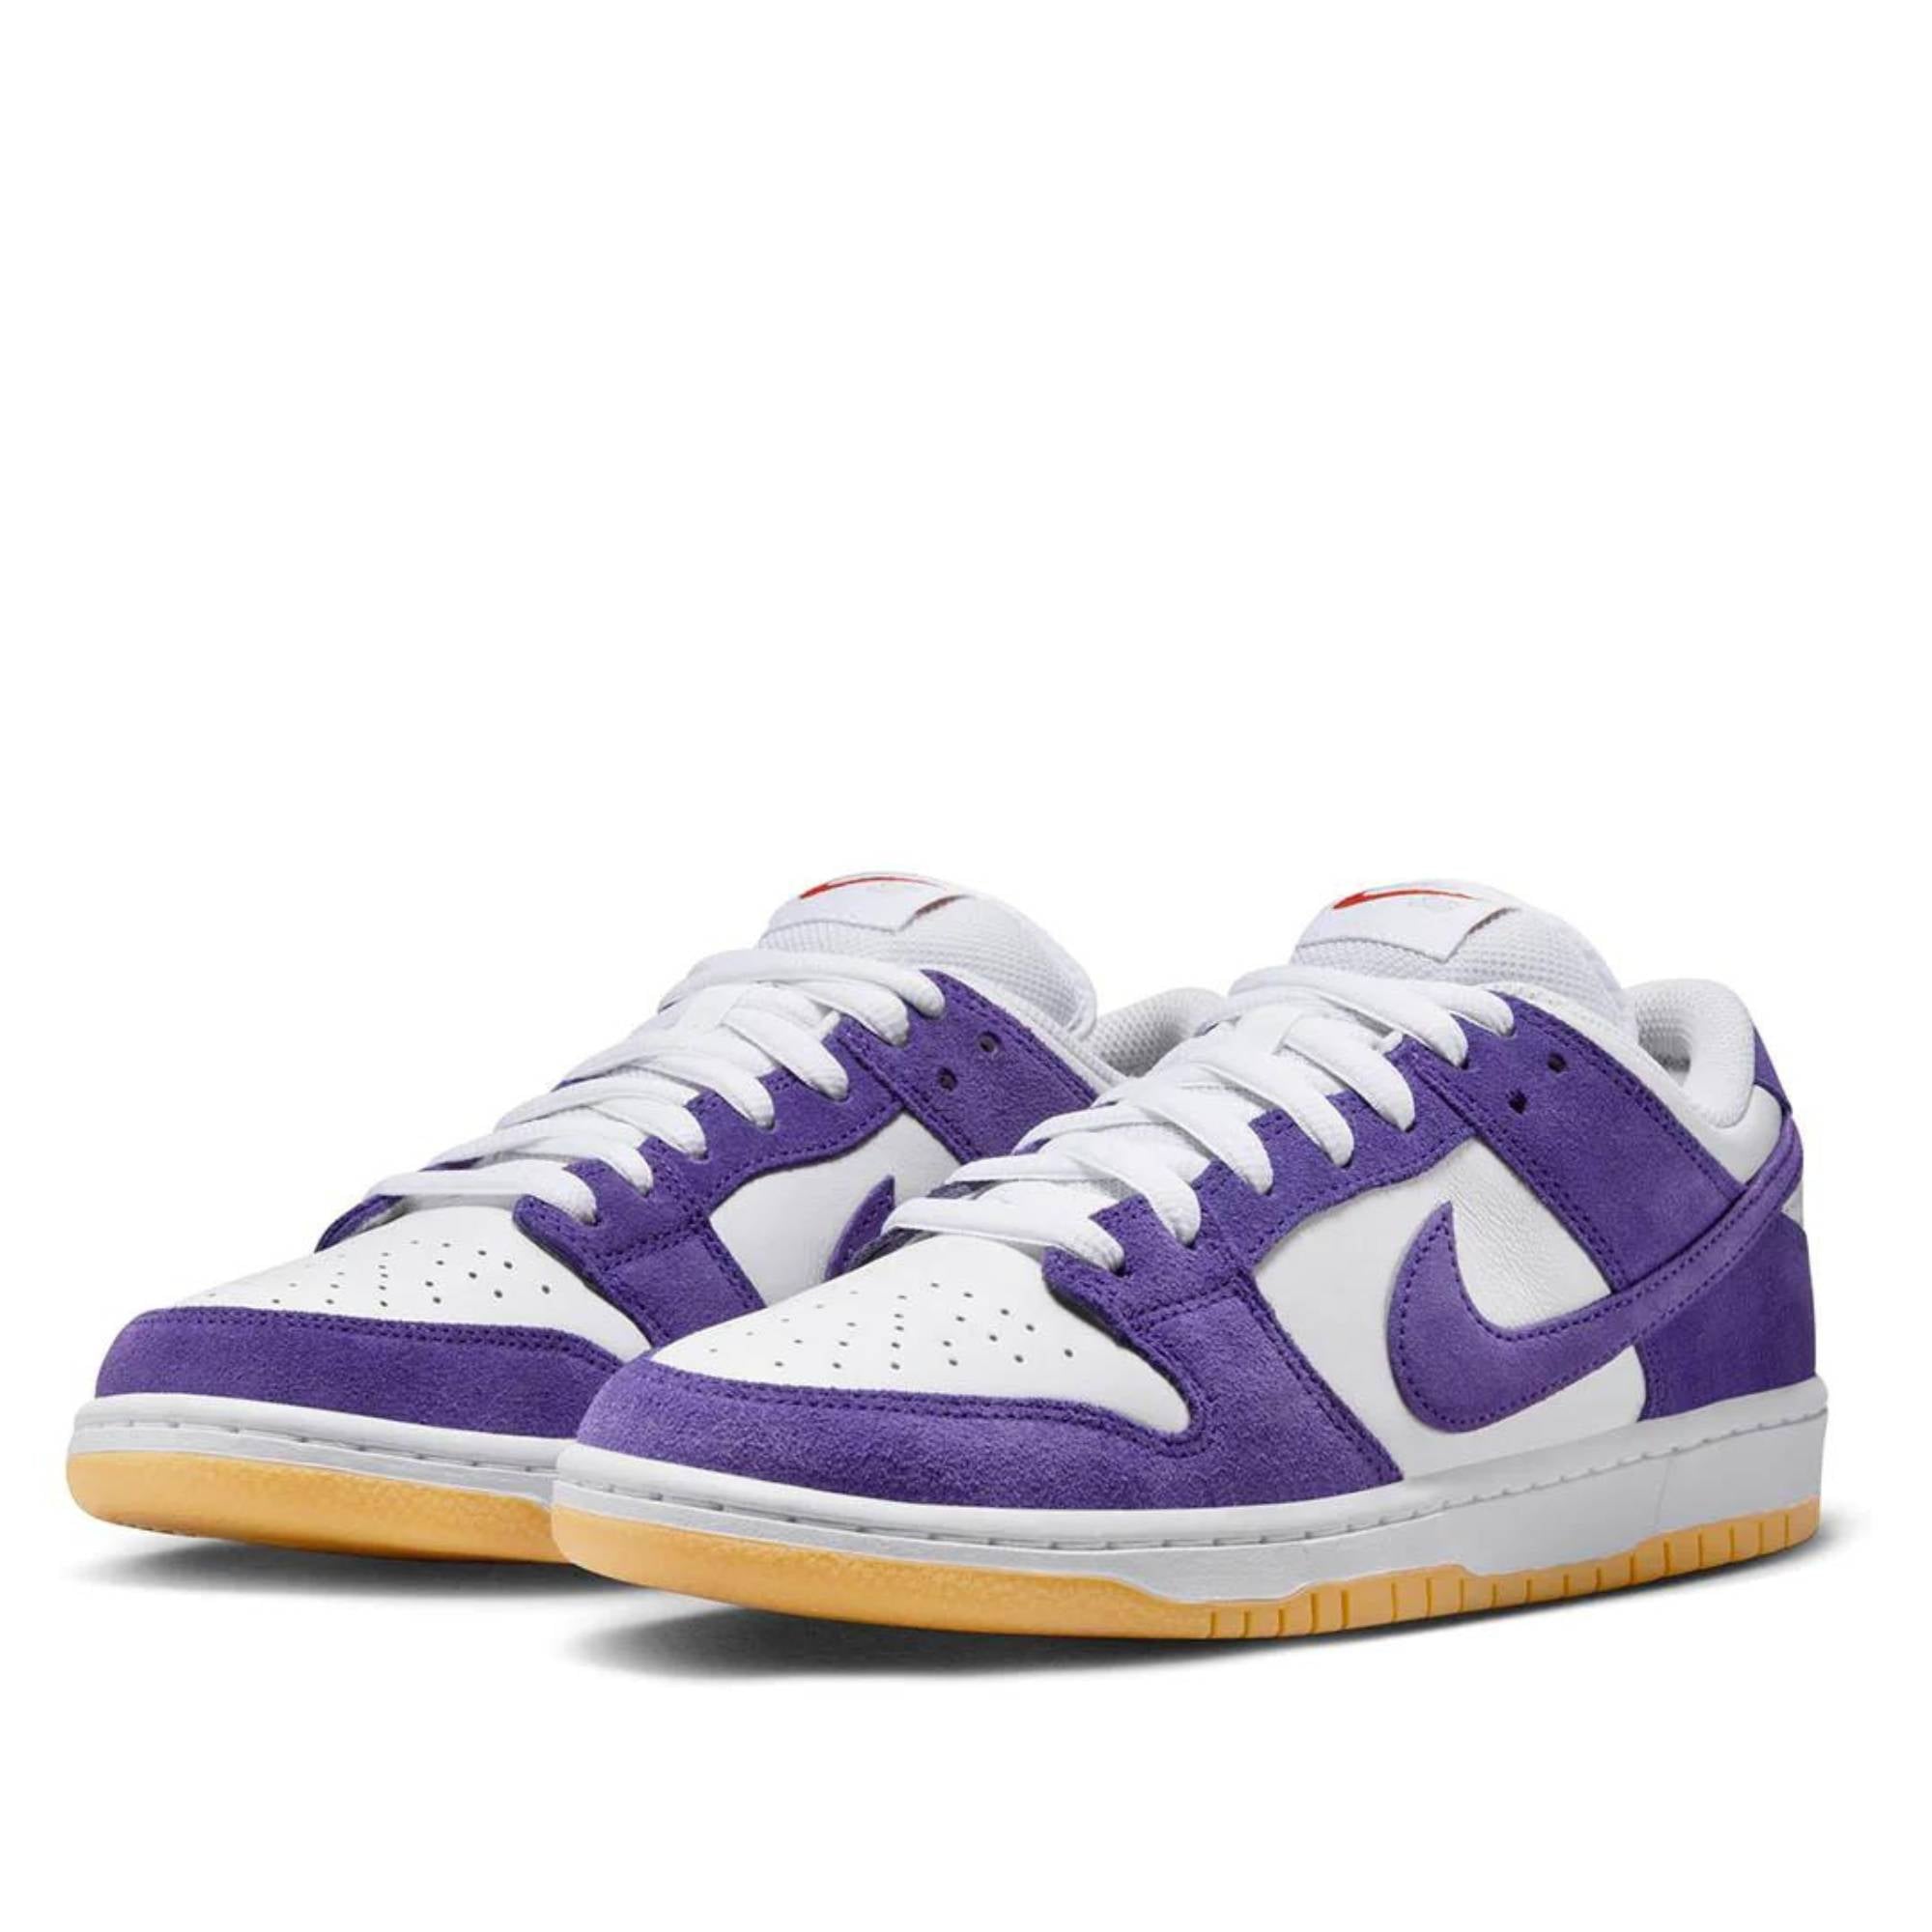 Nike Sb Dunk Low Pro Iso ’Court Purple’ M Us 9 / W 10.5 Sneakers